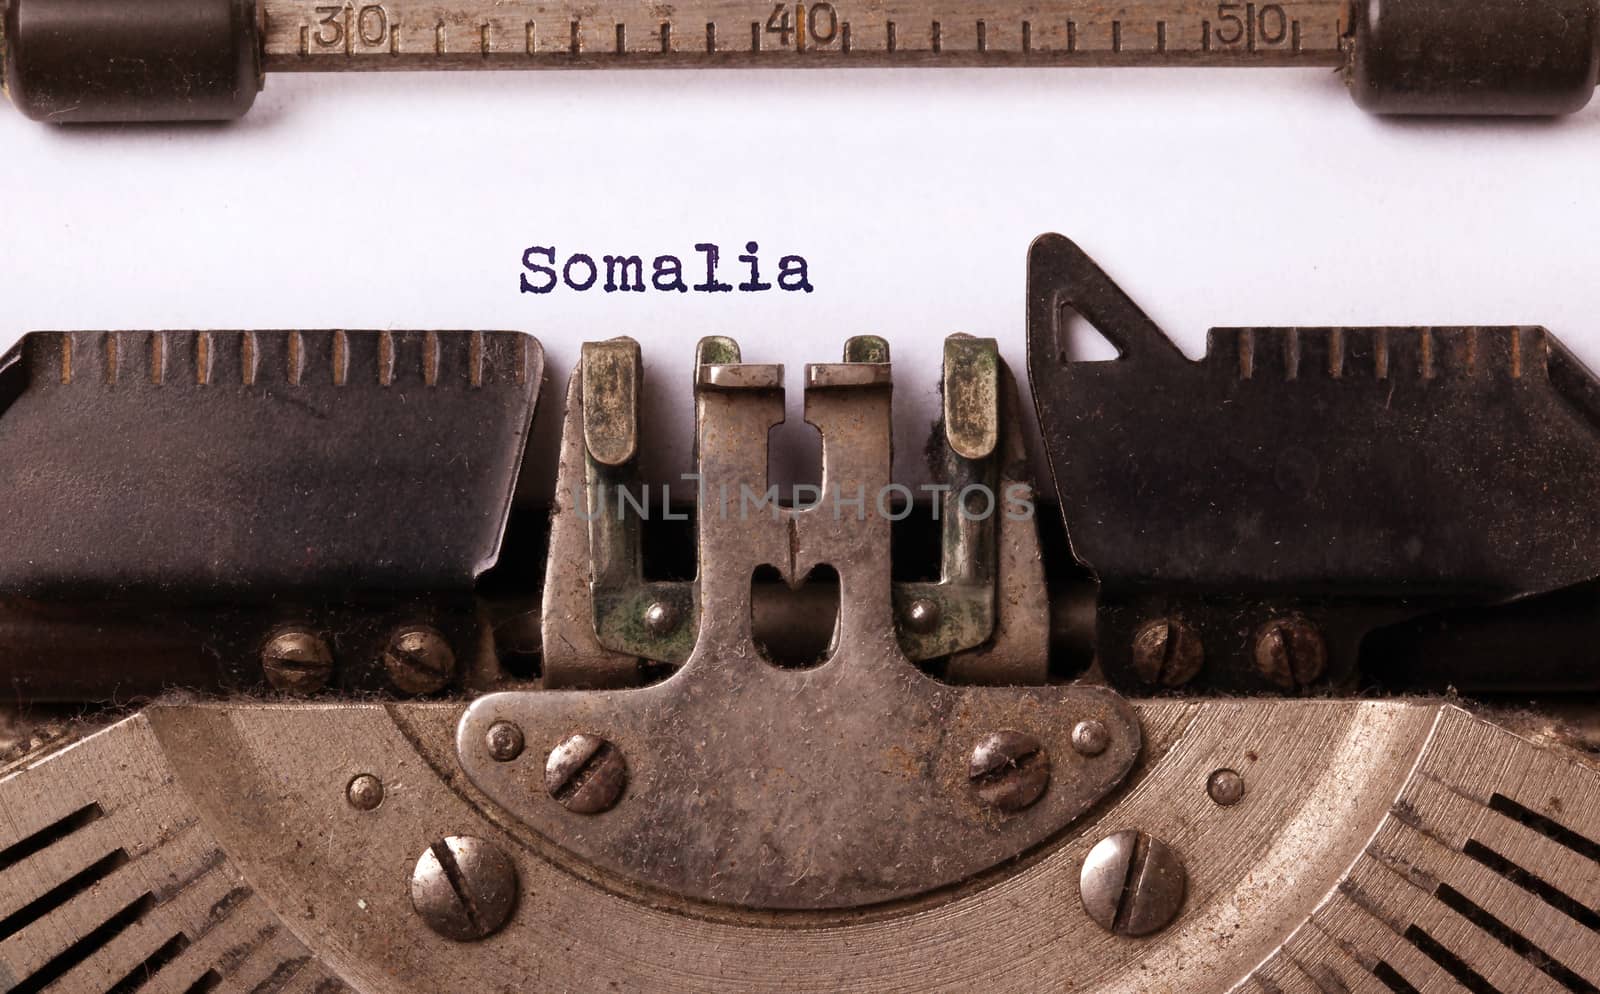 Old typewriter - Somalia by michaklootwijk